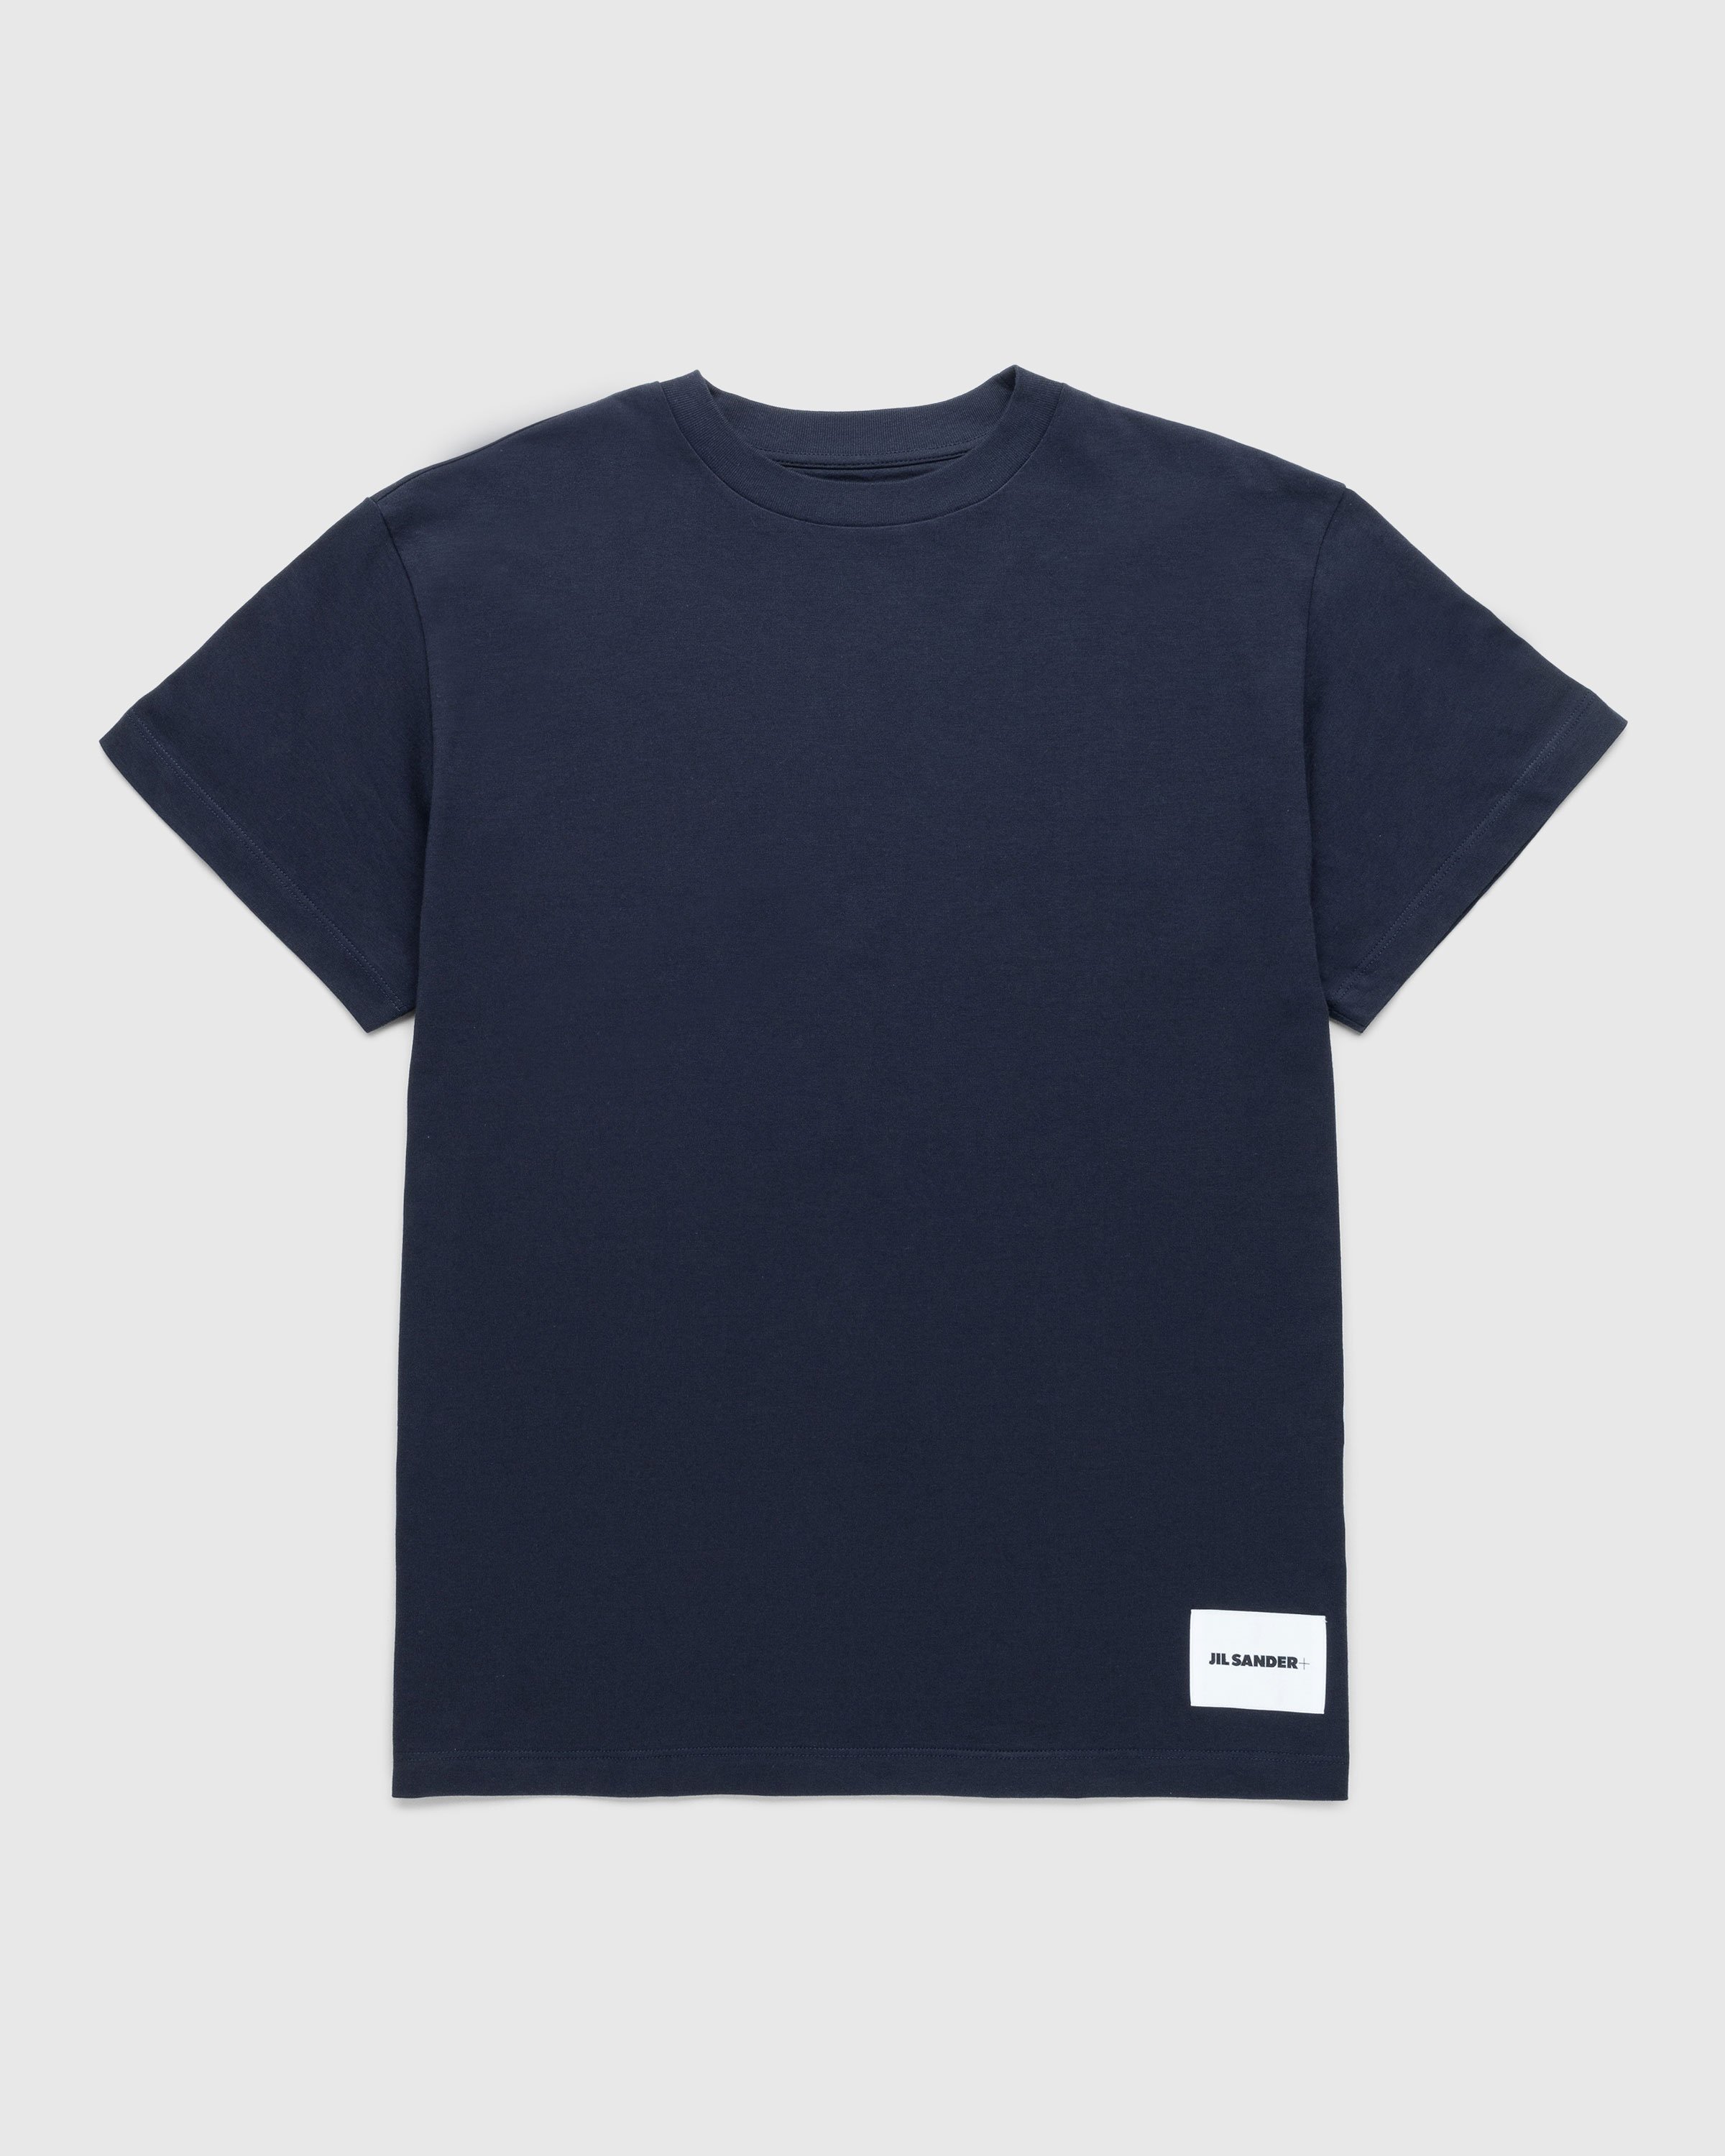 Jil Sander - 3-Pack Short-Sleeve T-Shirt Set Multi - Clothing - Multi - Image 2